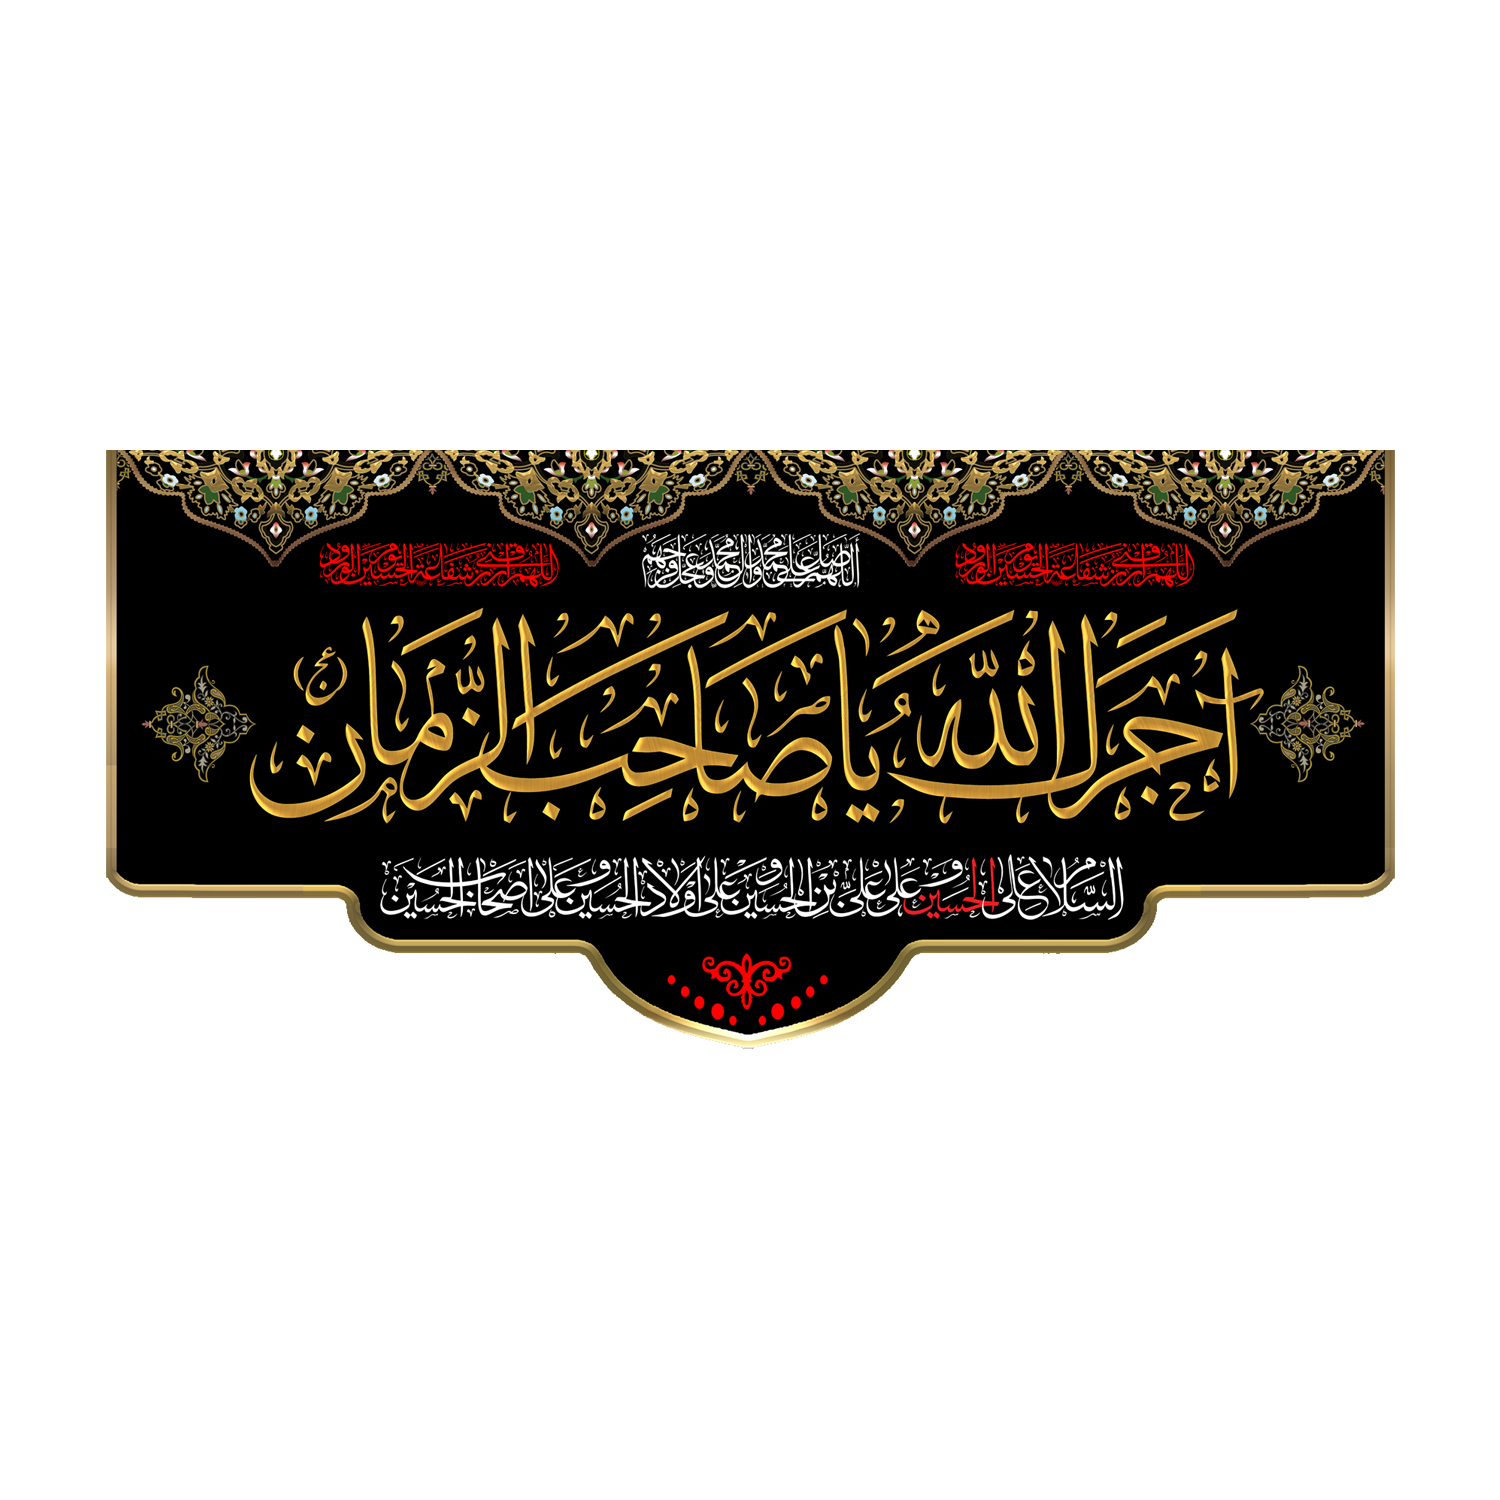 پرچم مدل آجرک الله یا صاحب الزمان کد 500080-14065